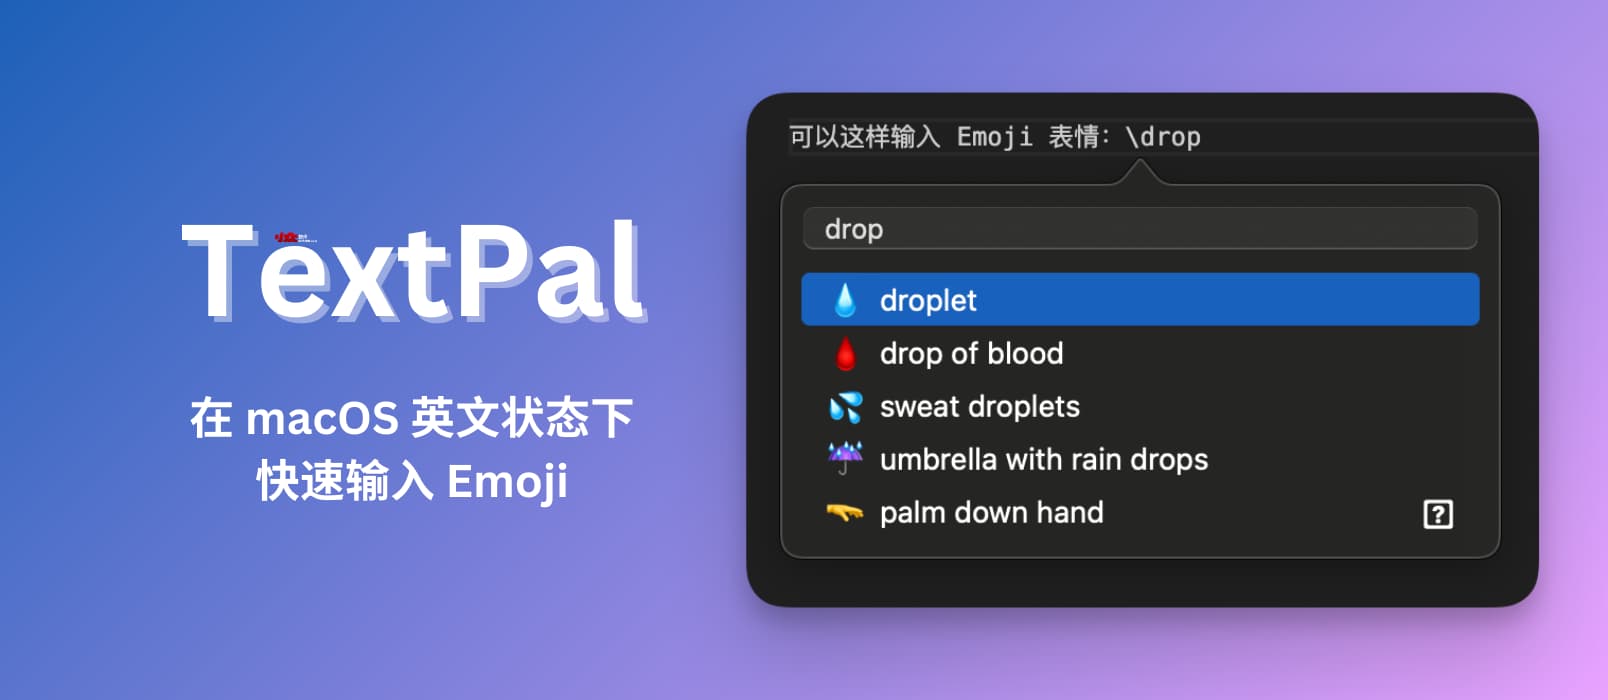 TextPal - 在 macOS 英文输入法状态下，快速输入 Emoji 表情